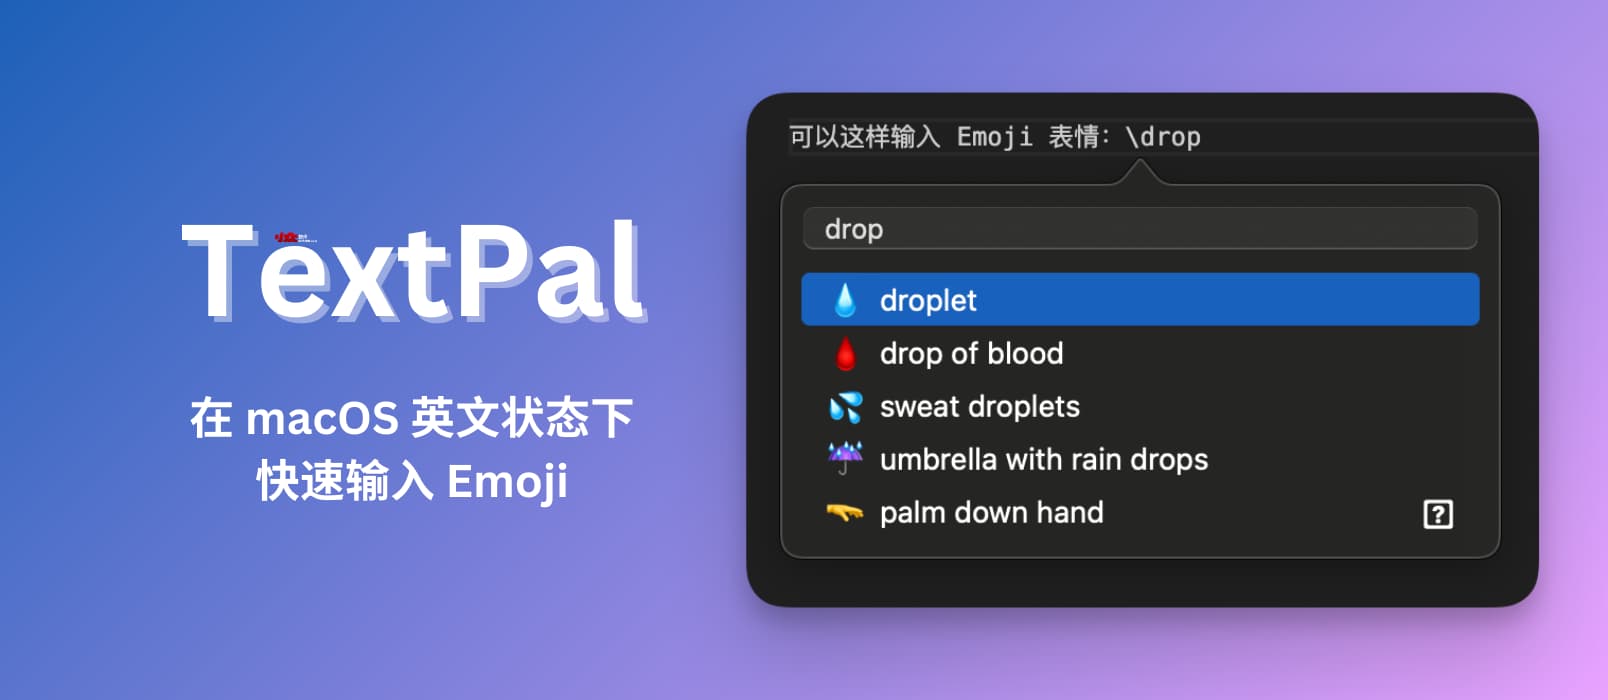 TextPal - 在 macOS 英文输入法状态下，快速输入 Emoji 表情